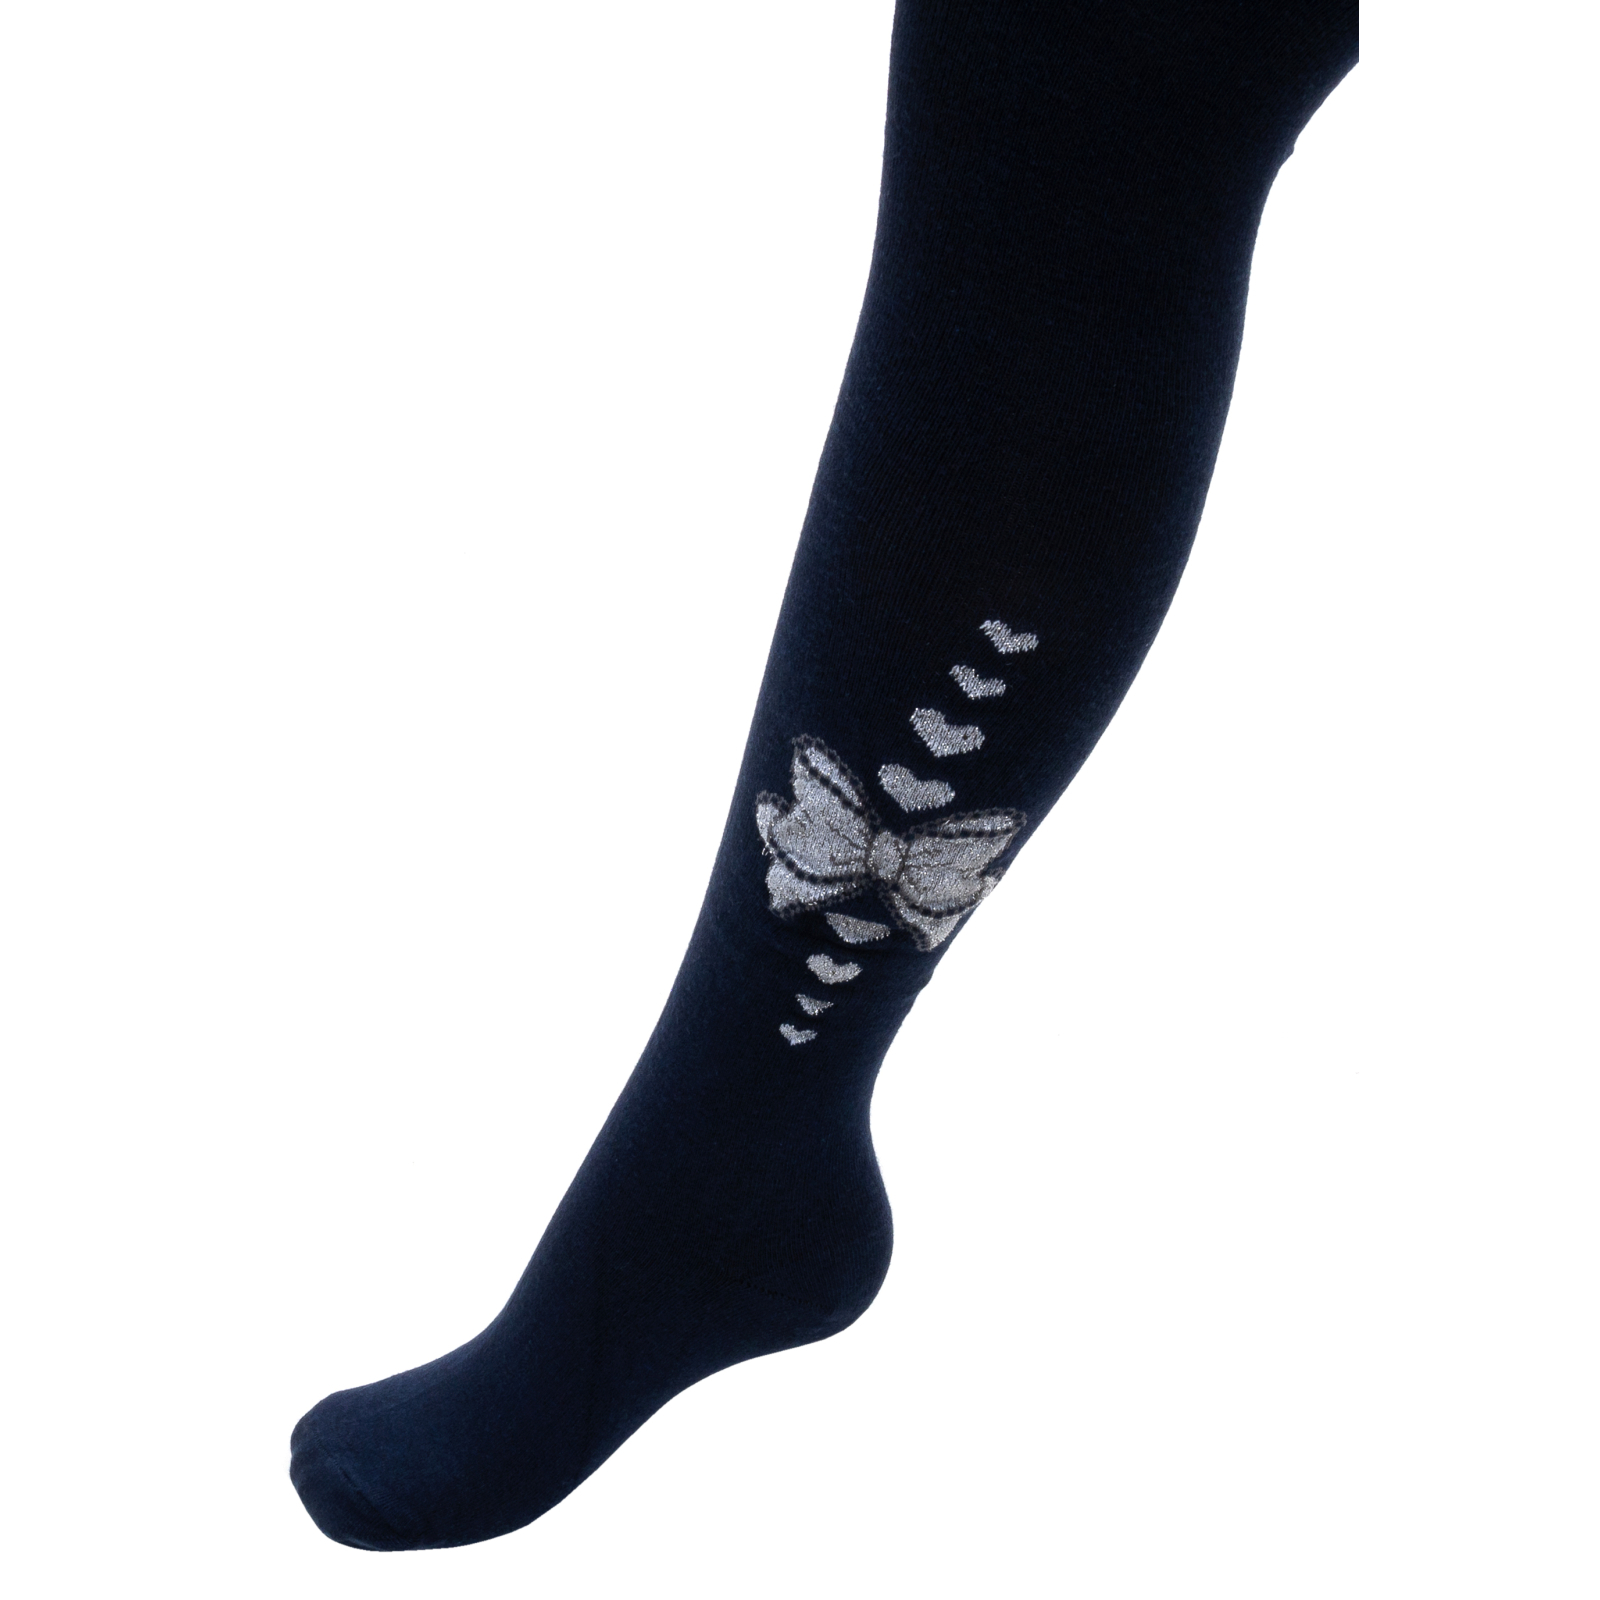 Колготки UCS Socks с бантом (M0C0301-2192-146G-gray)